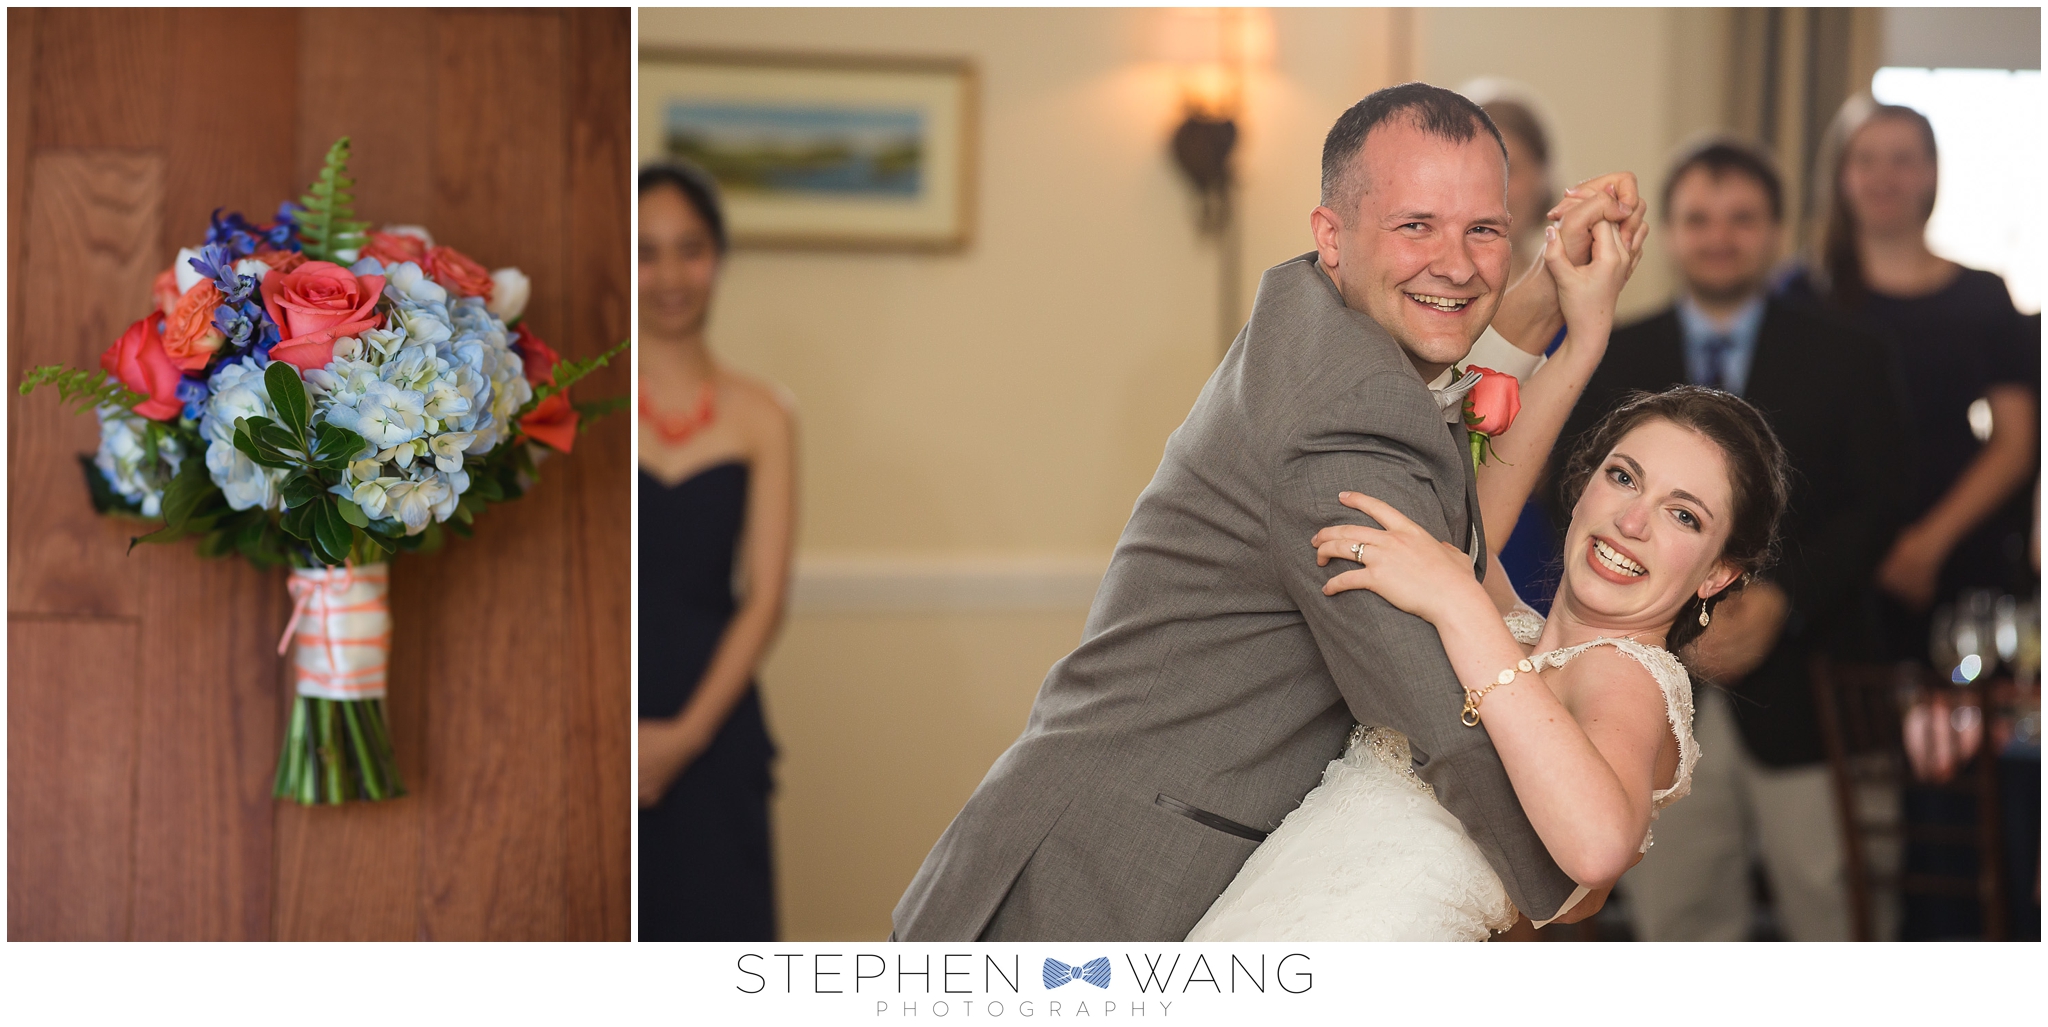 Stephen Wang Photography Wedding Photographer Connecticut CT-12-24_0007.jpg